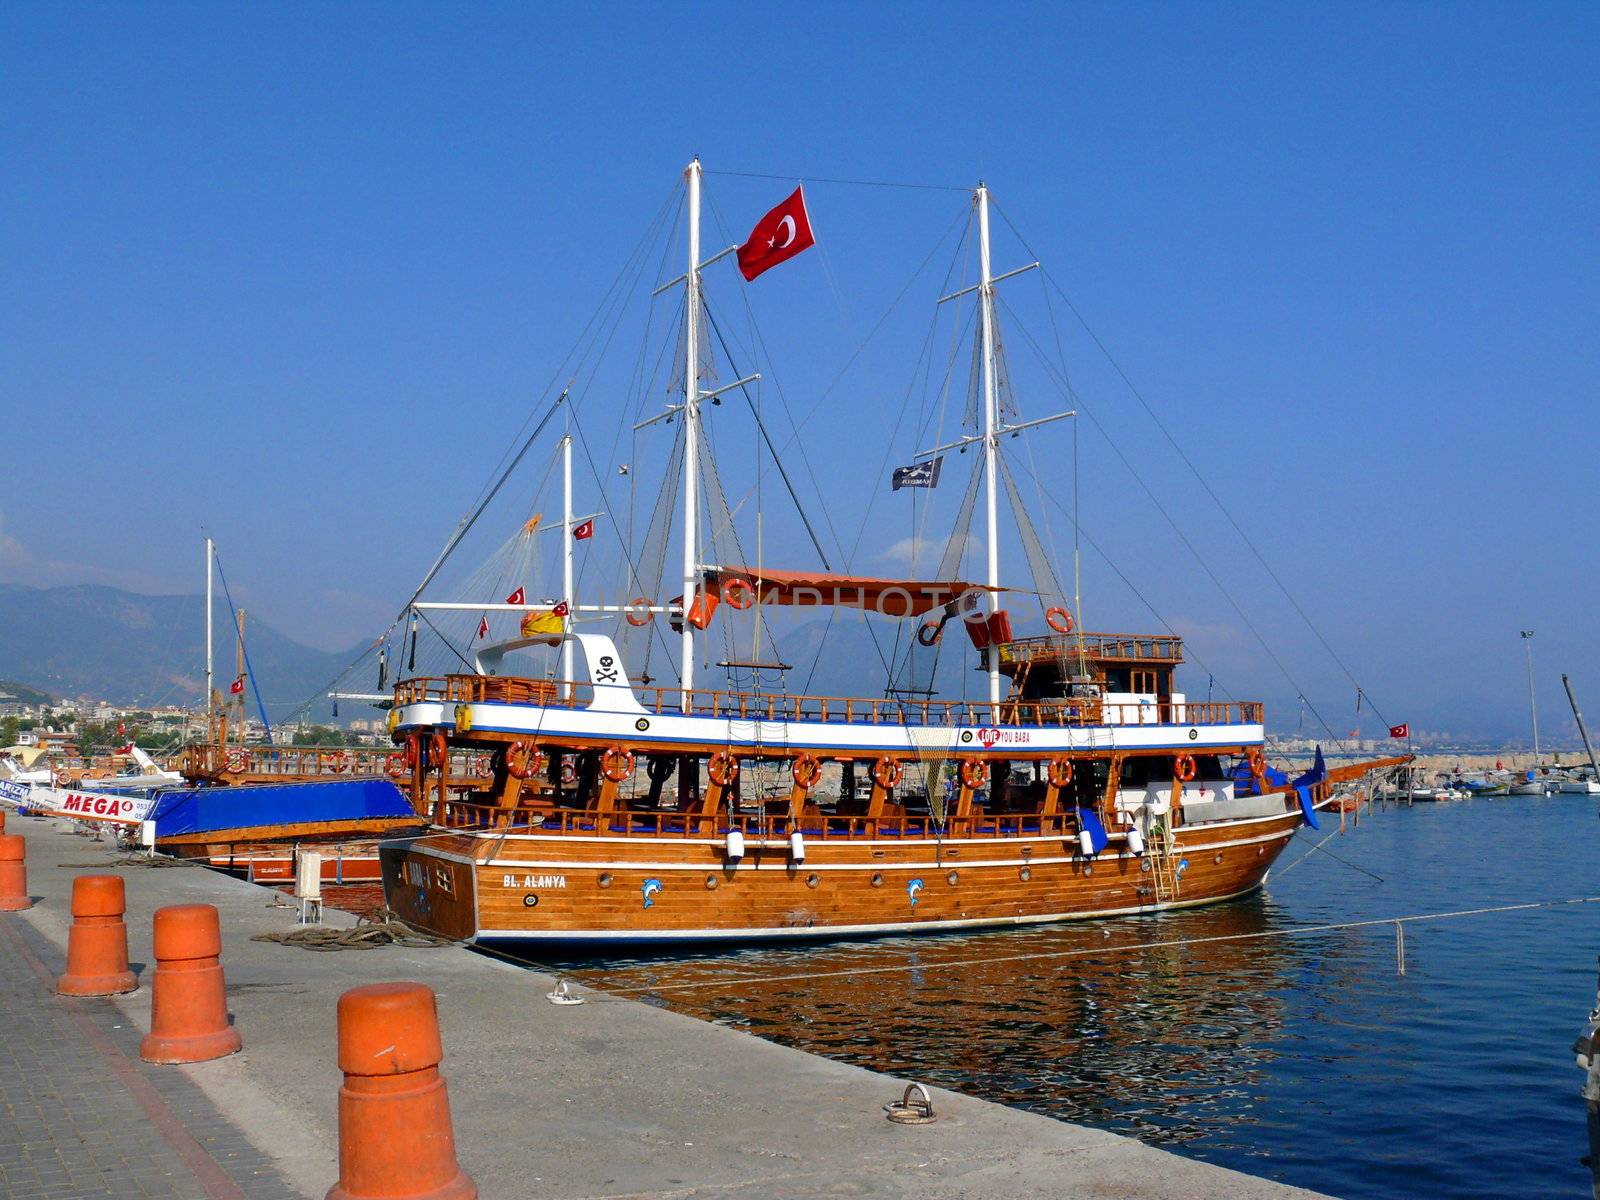 Boat in Alania bay - Tourkey